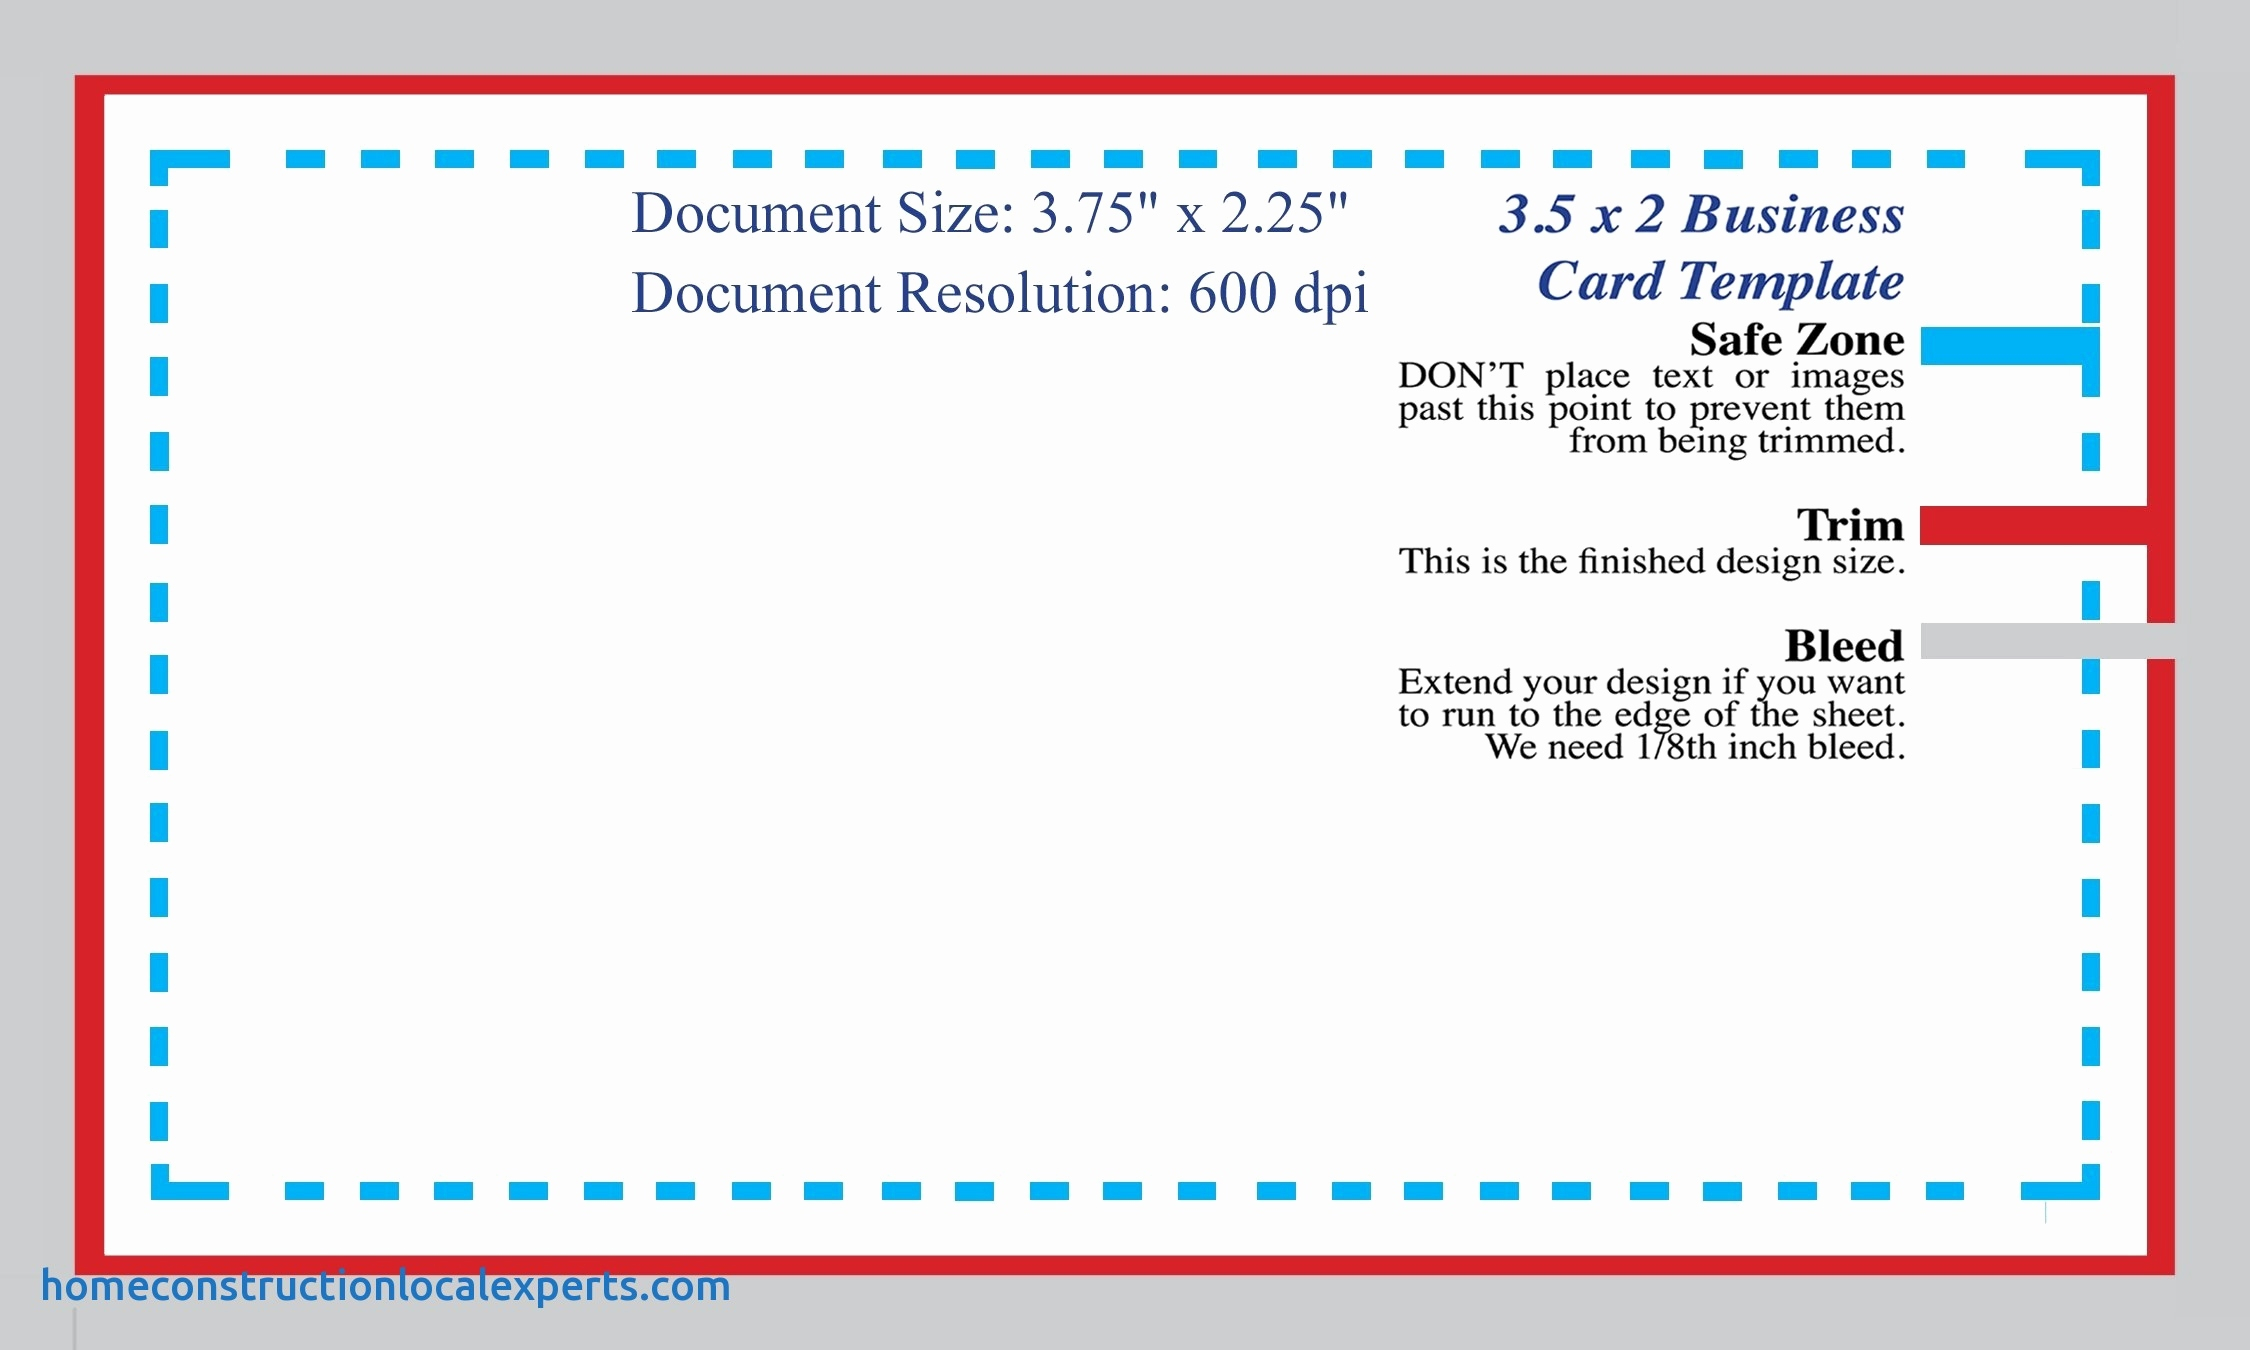 Business Card Font Size Letters Photoshop Minimum Guide Inside Business Card Template Size Photoshop